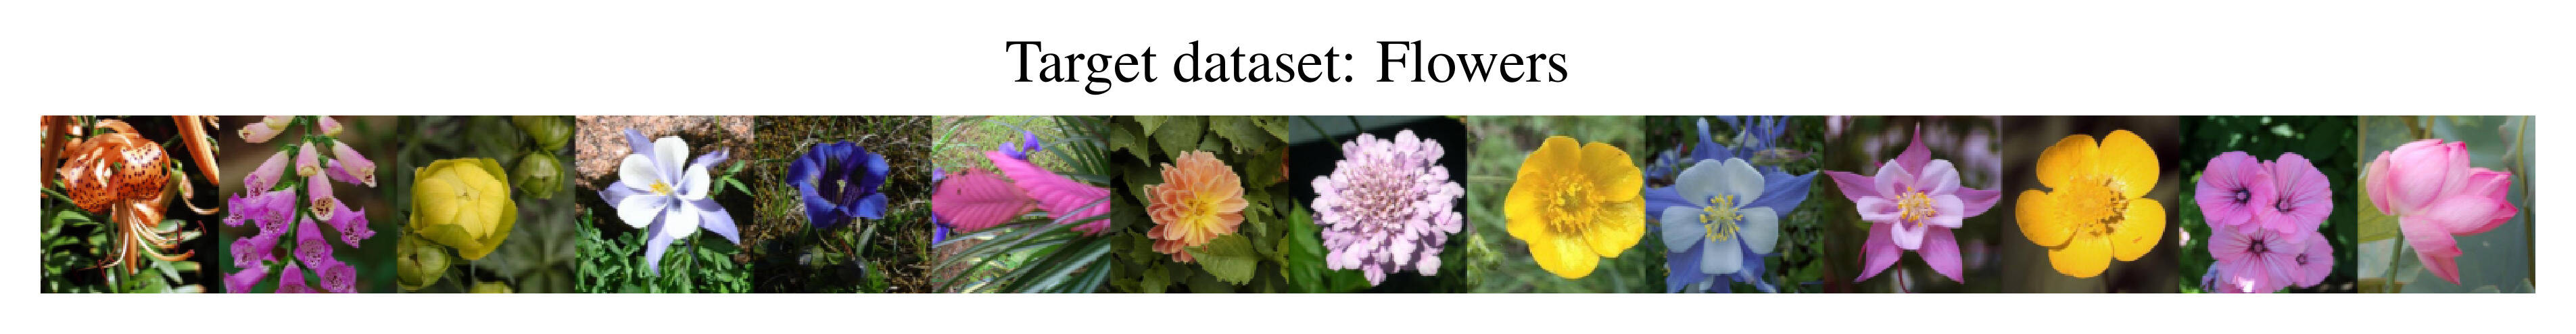 Flowers target dataset.